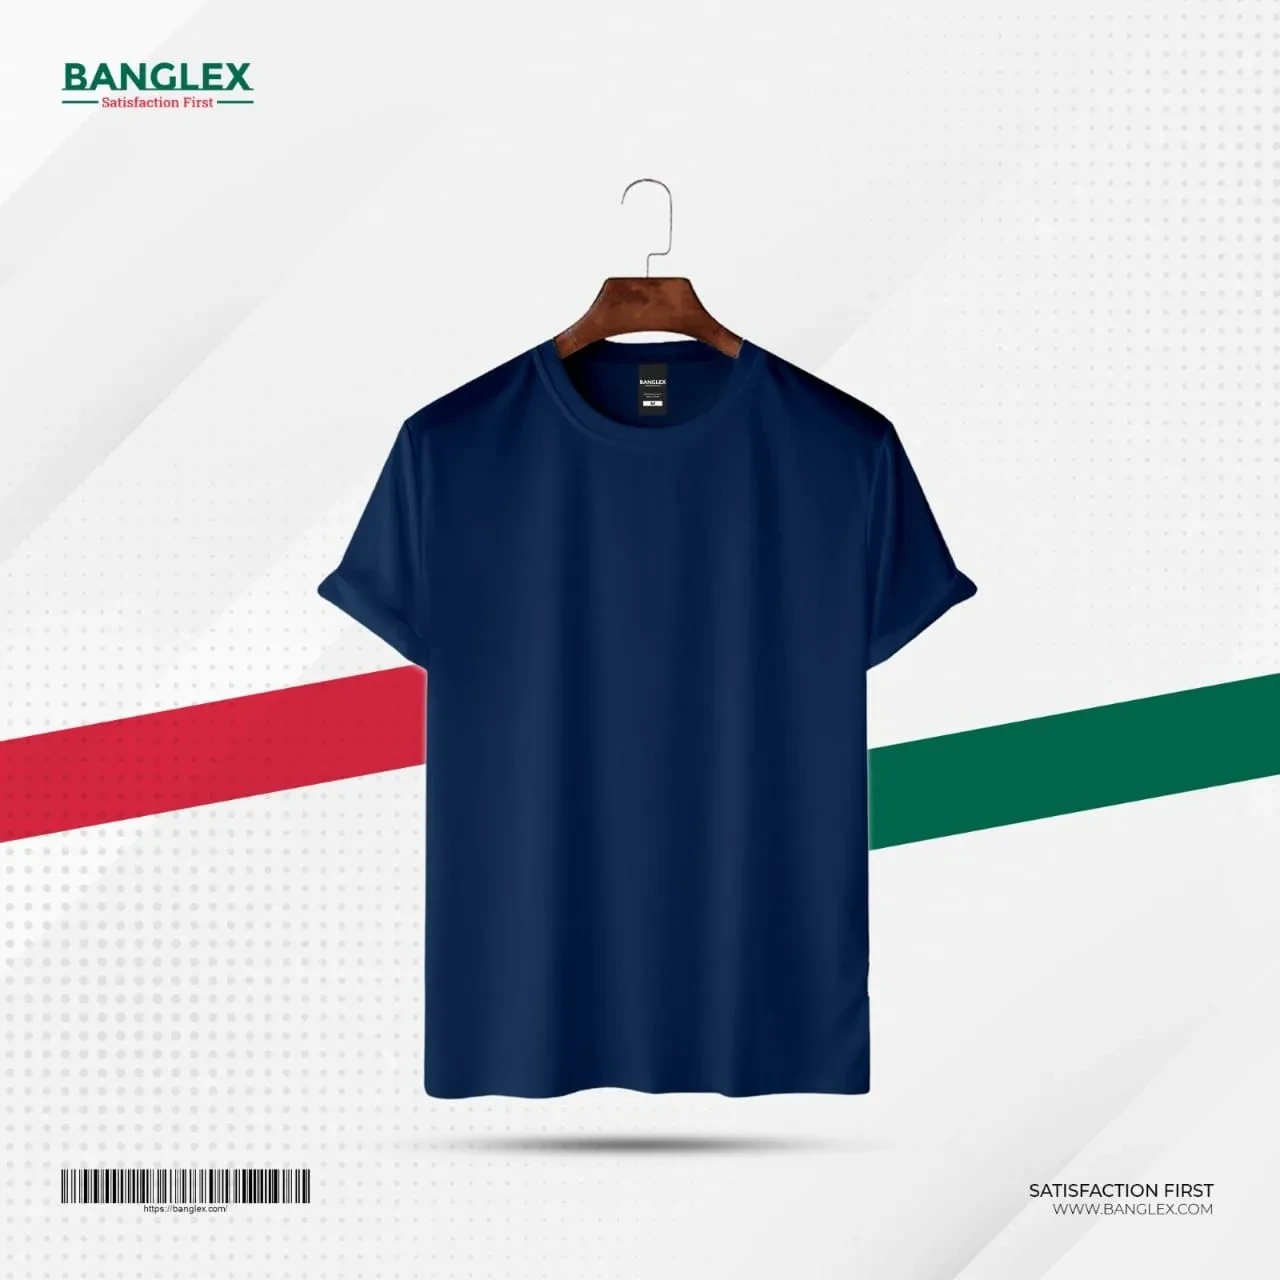 Banglex Men's Premium Blank T-shirt - Navy Blue